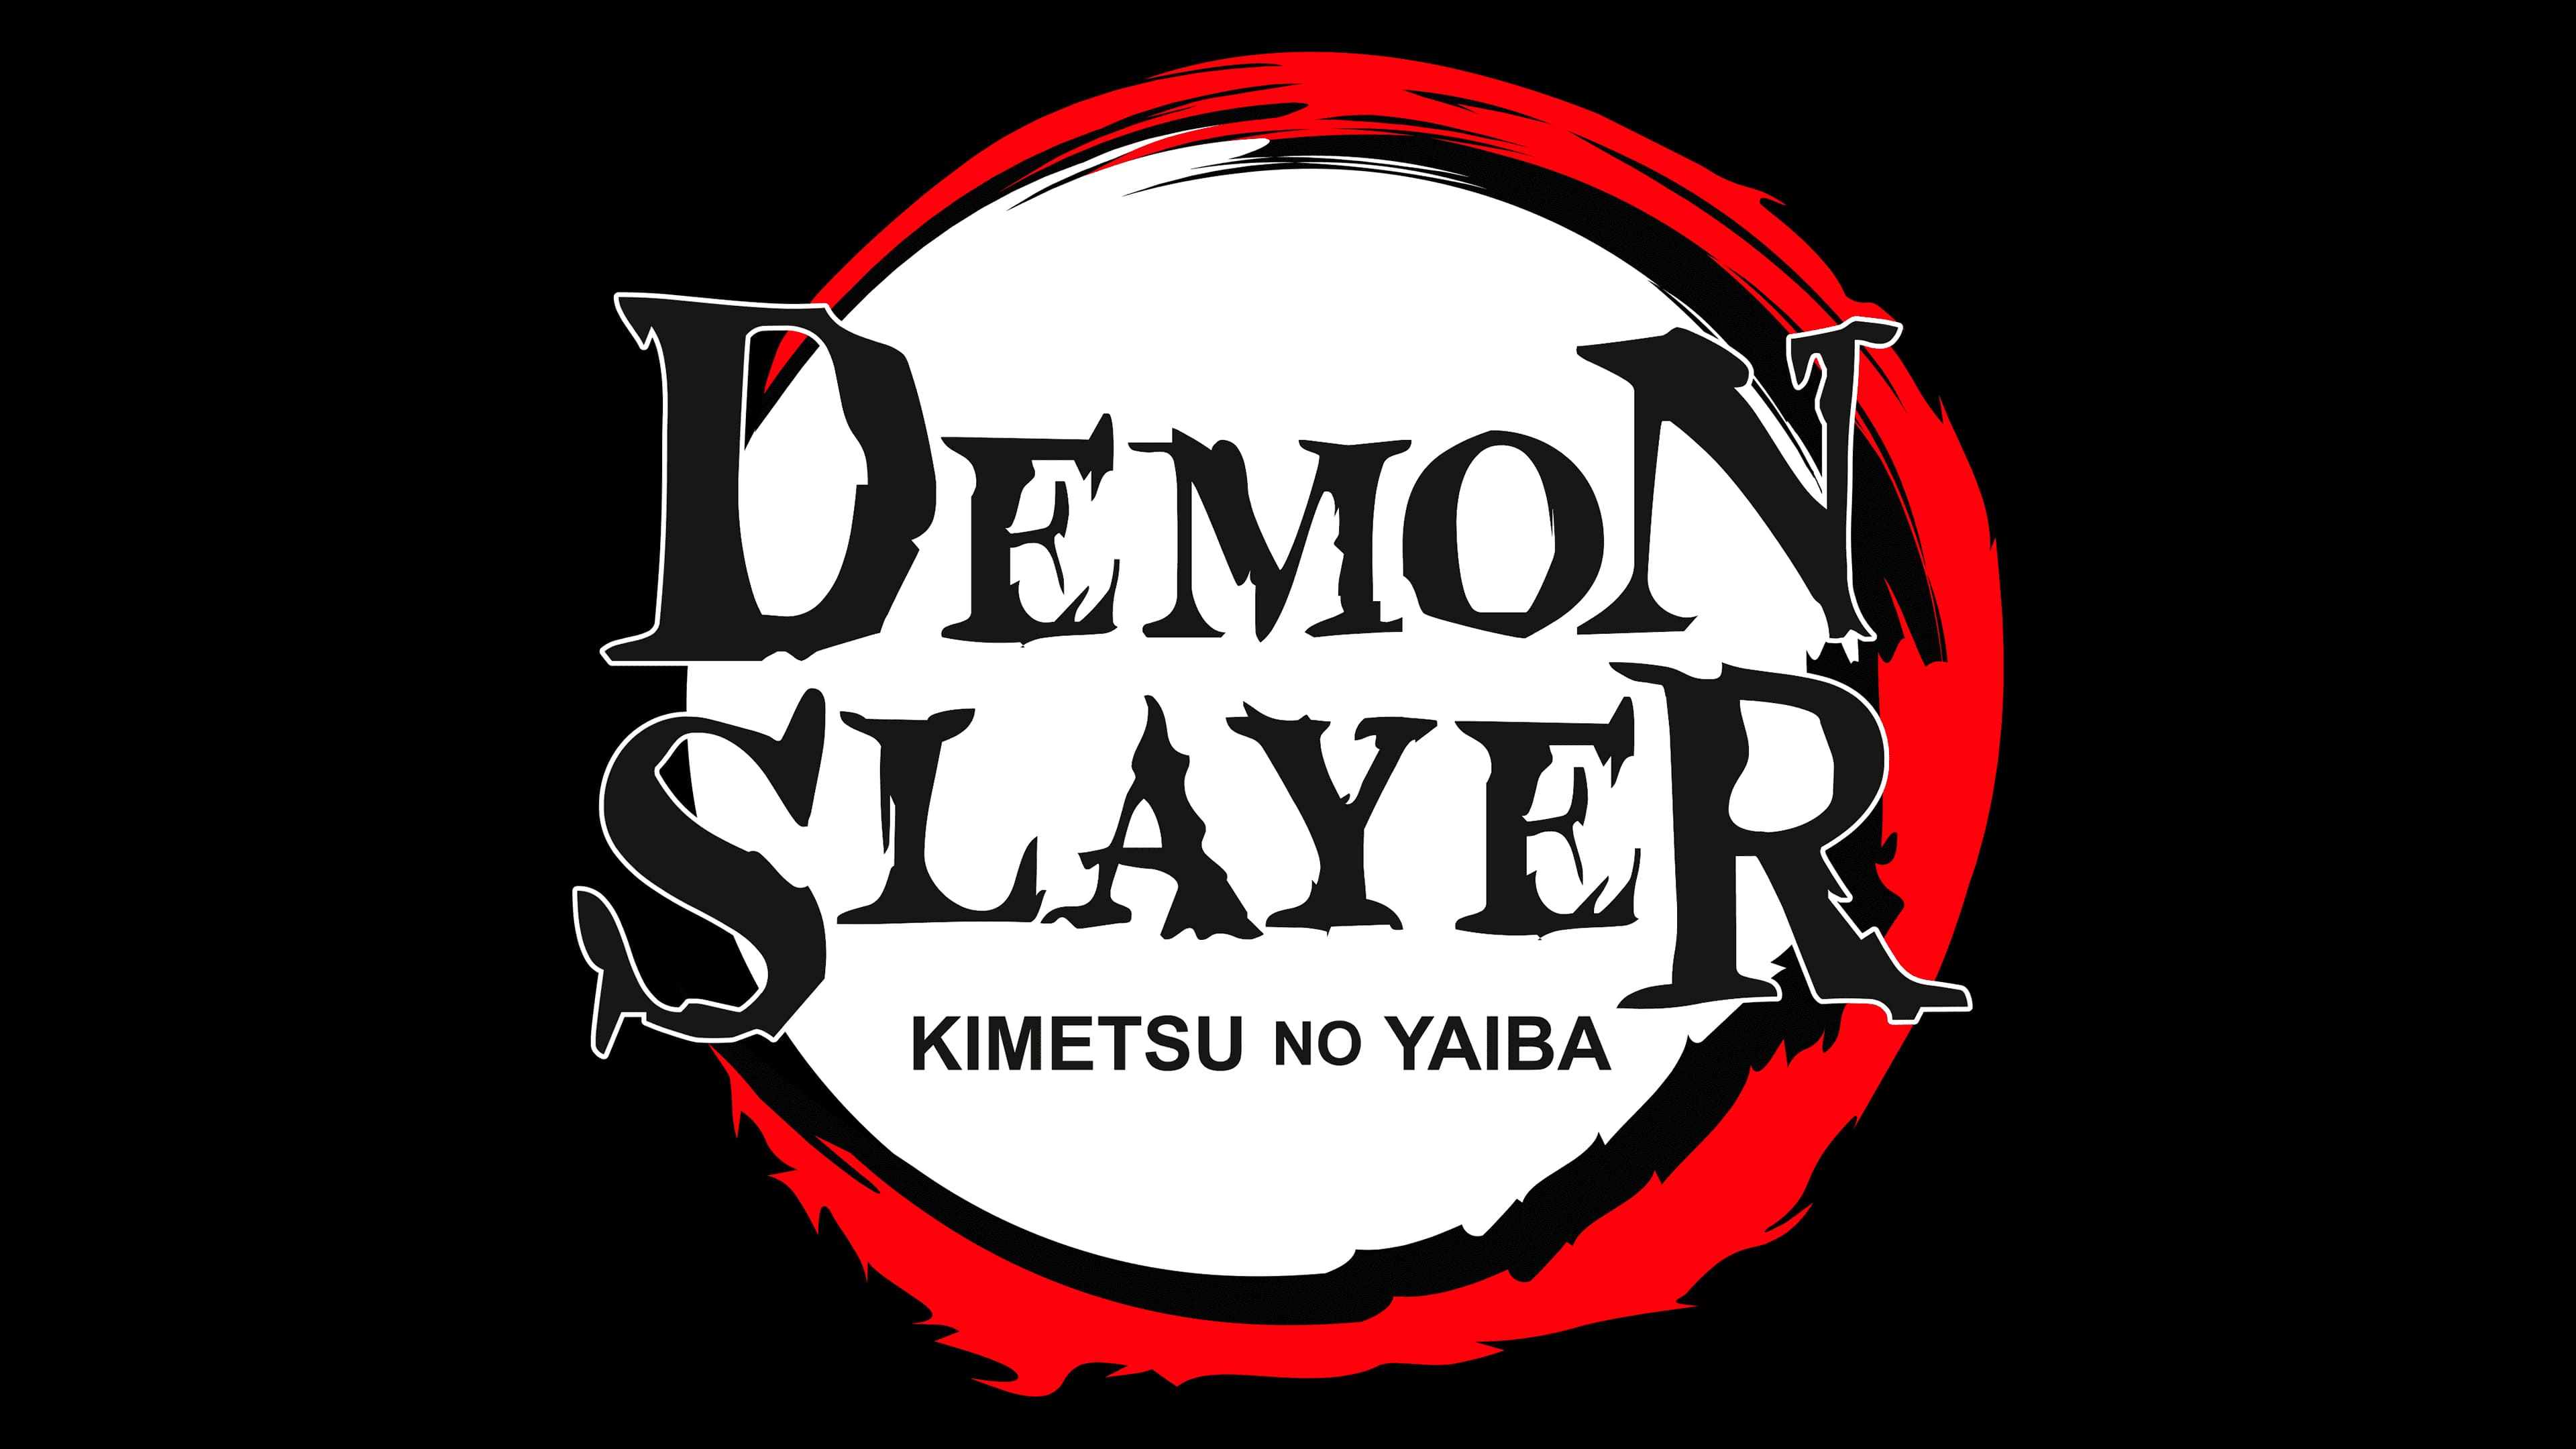 Demon Slayer Logo Y S Mbolo Significado Historia Png Marca The Best